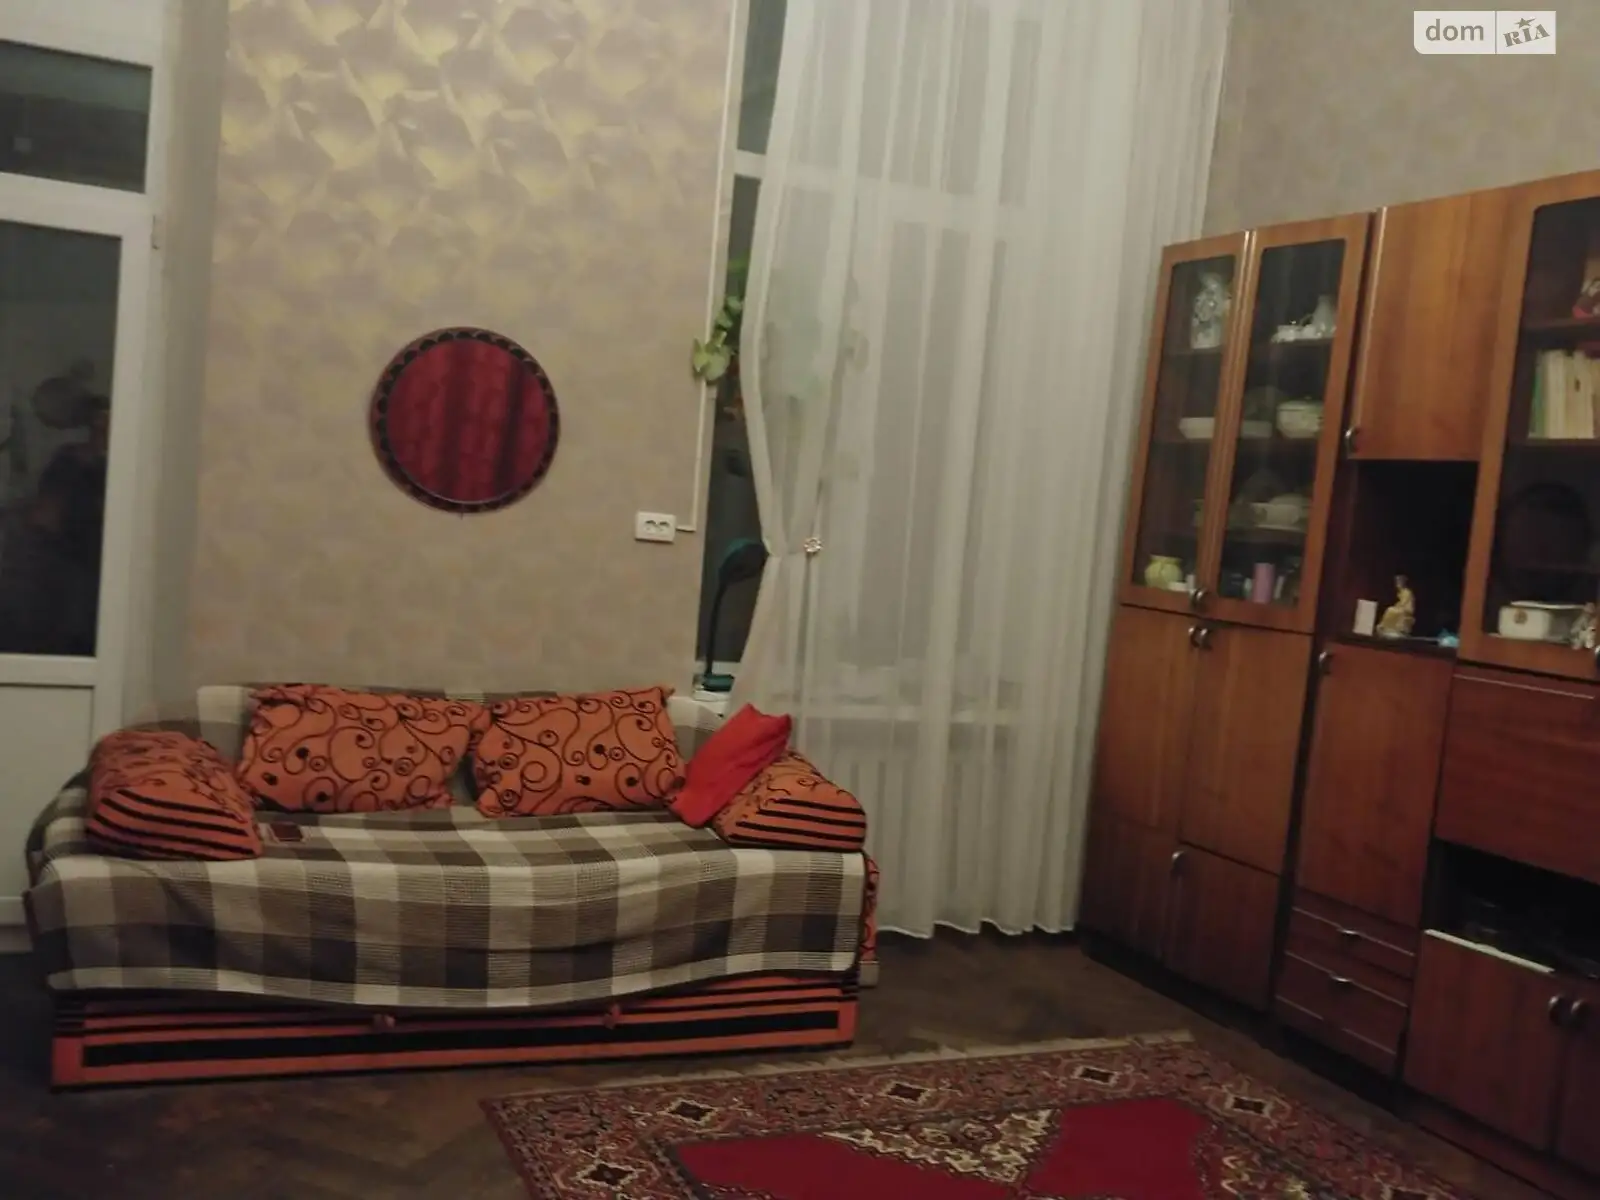 Продается комната 152.4 кв. м в Одессе, цена: 125000 $ - фото 1